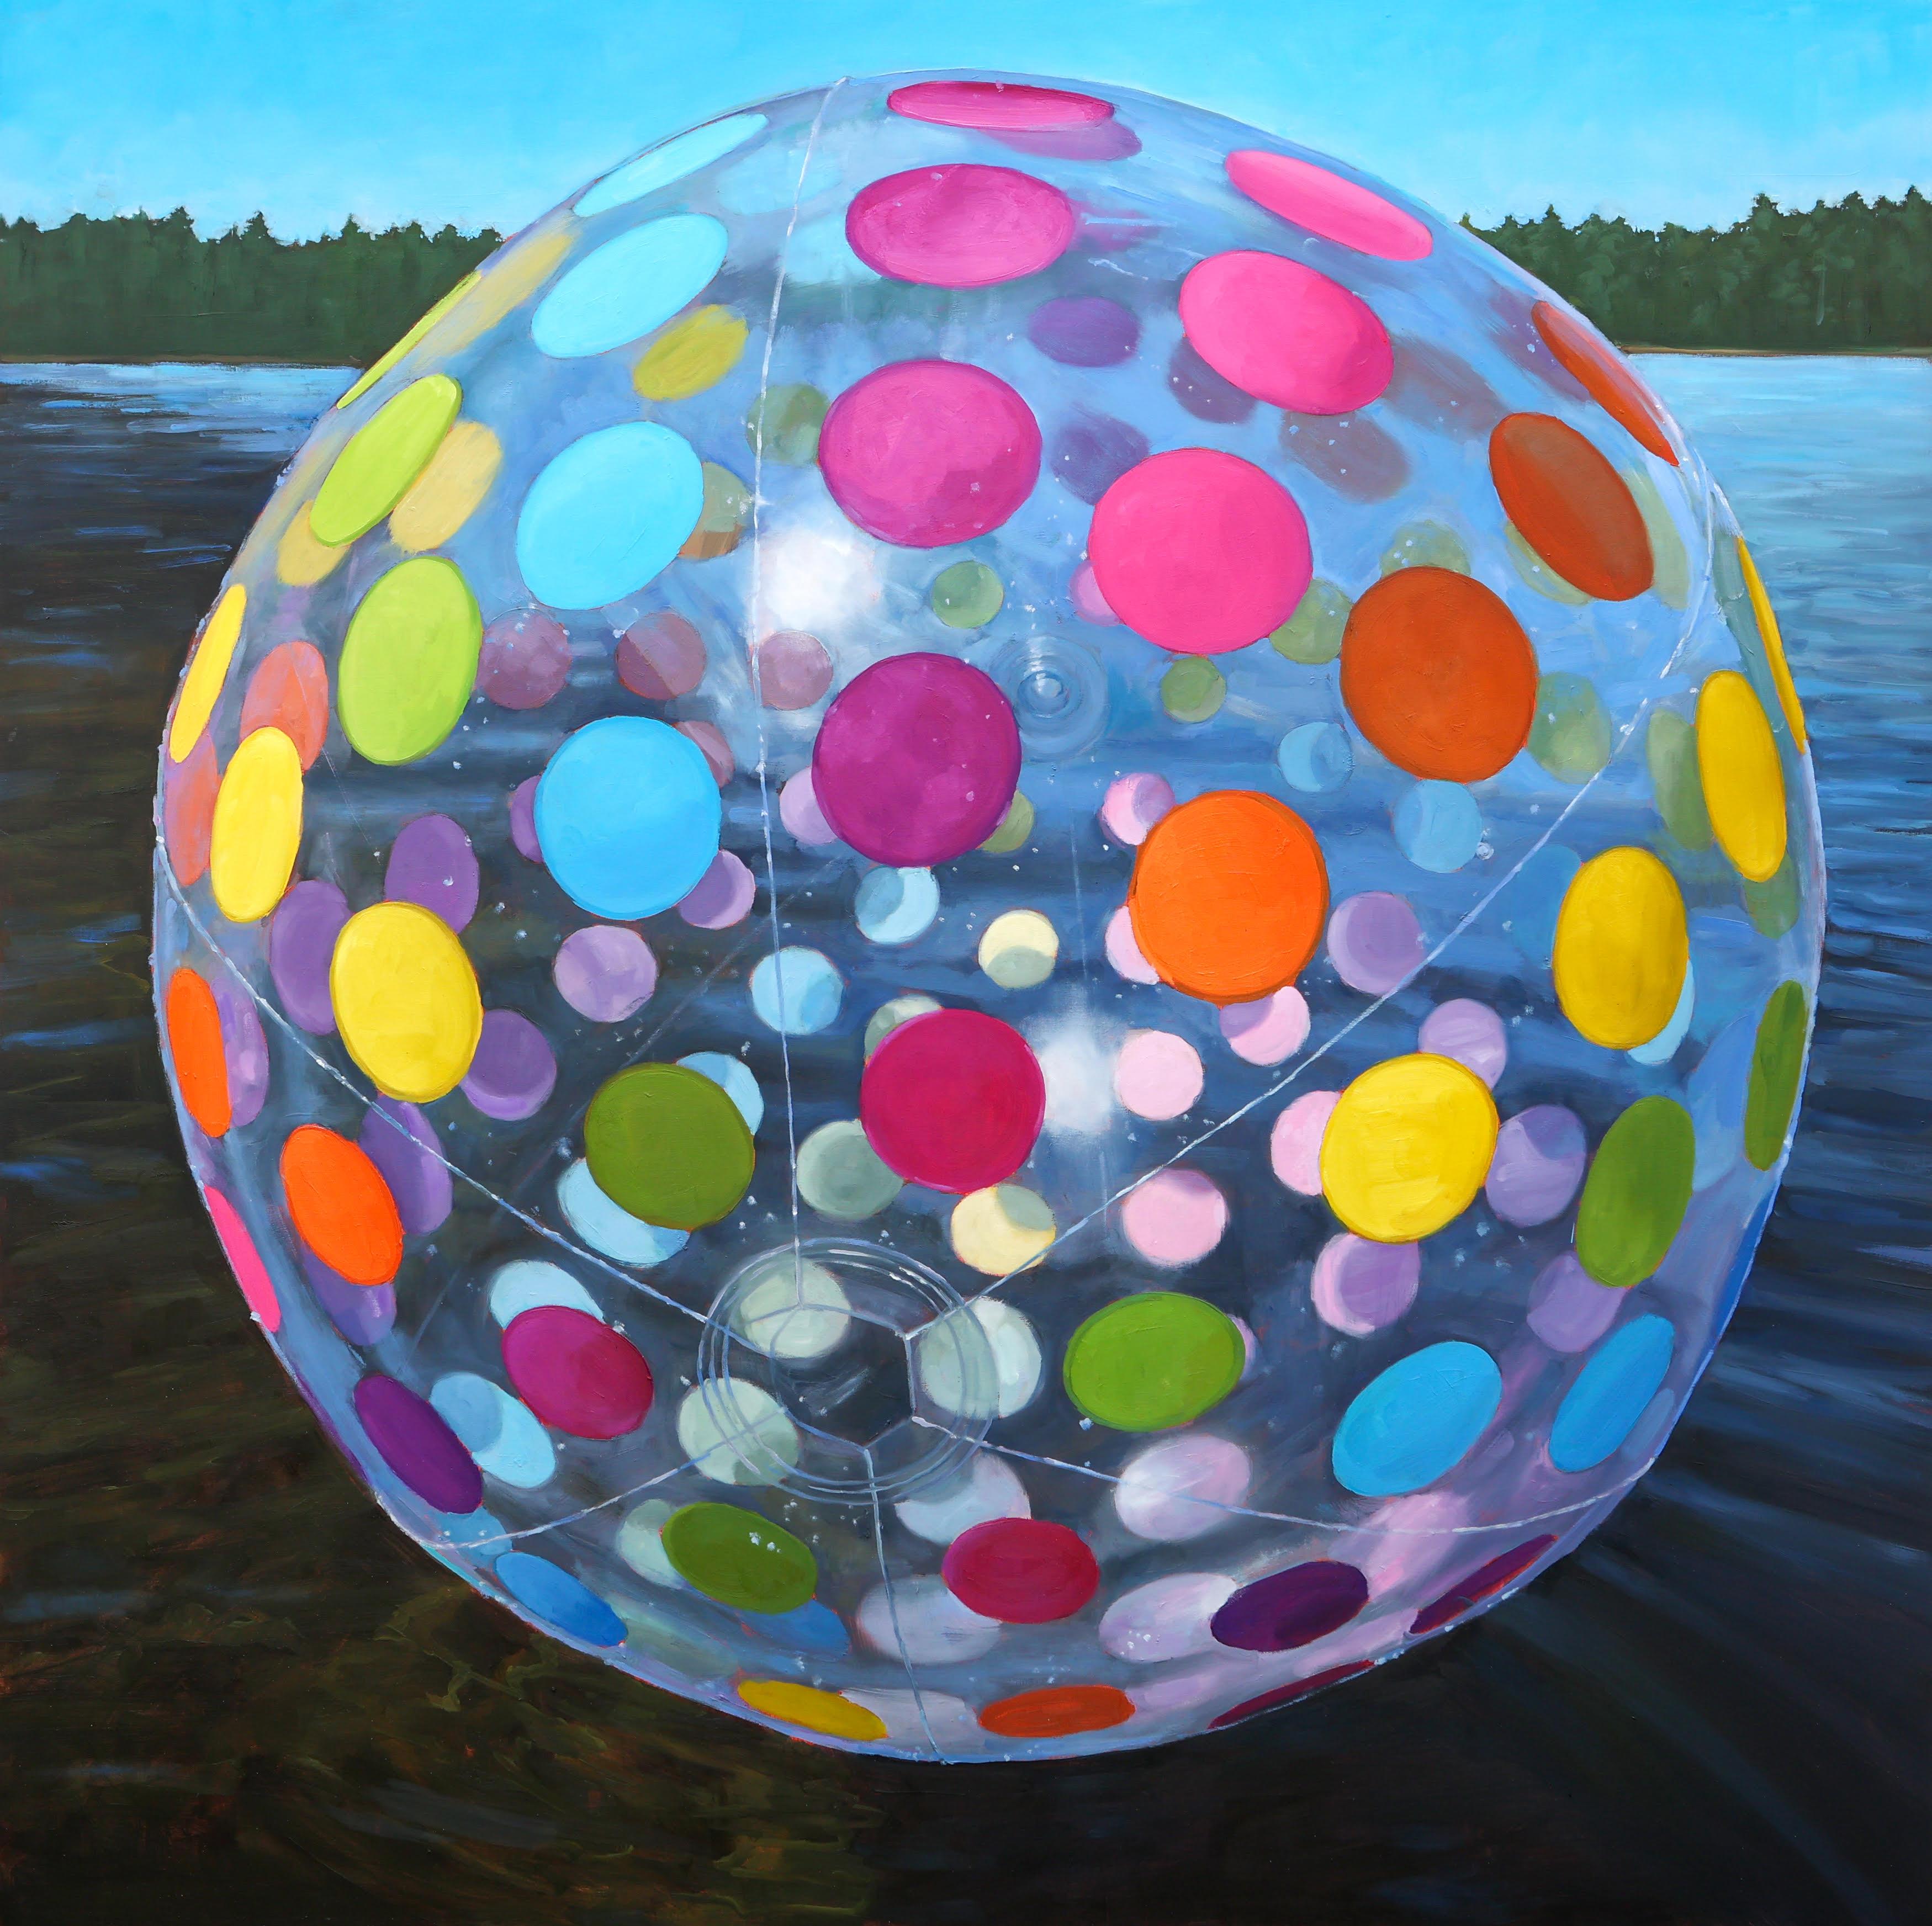 Carol O'Malia Still-Life Painting - "Spotted!" oil on panel with a vibrant polka dot beach ball